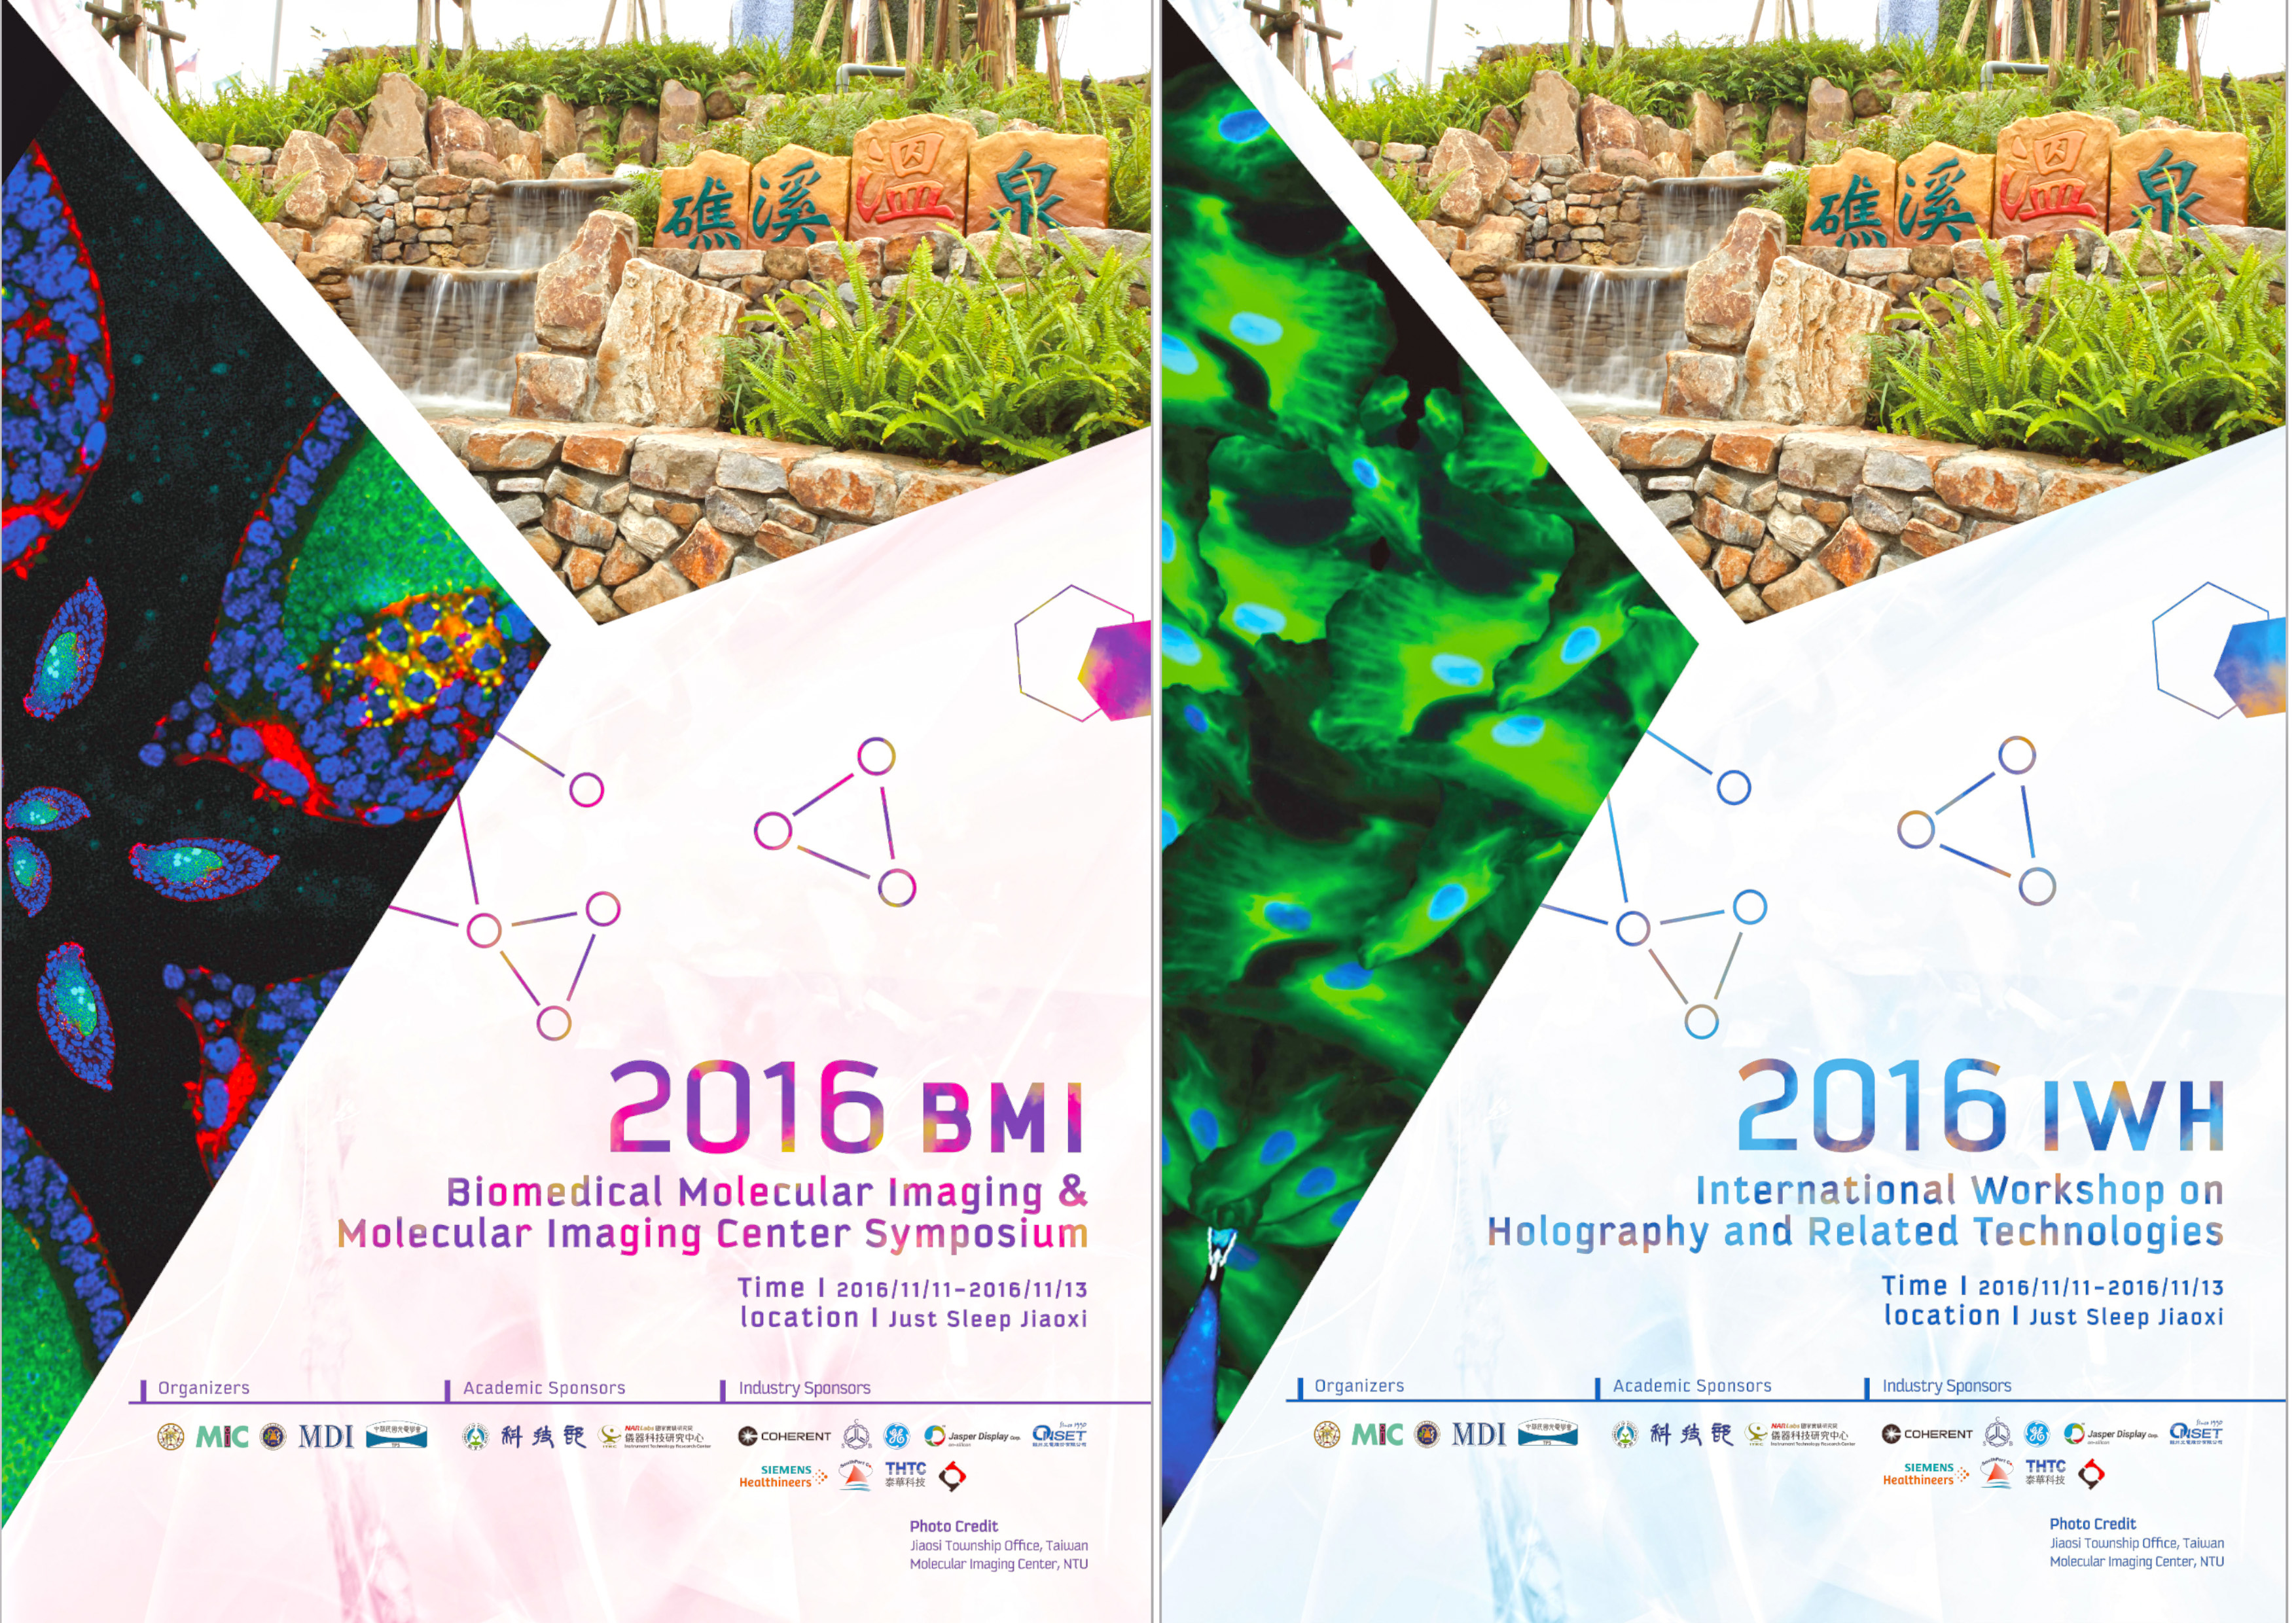 2016 Biomedical Molecular Imaging & Molecular Imaging Center Symposium_2016 International Workshop on Holography and Related Technologies